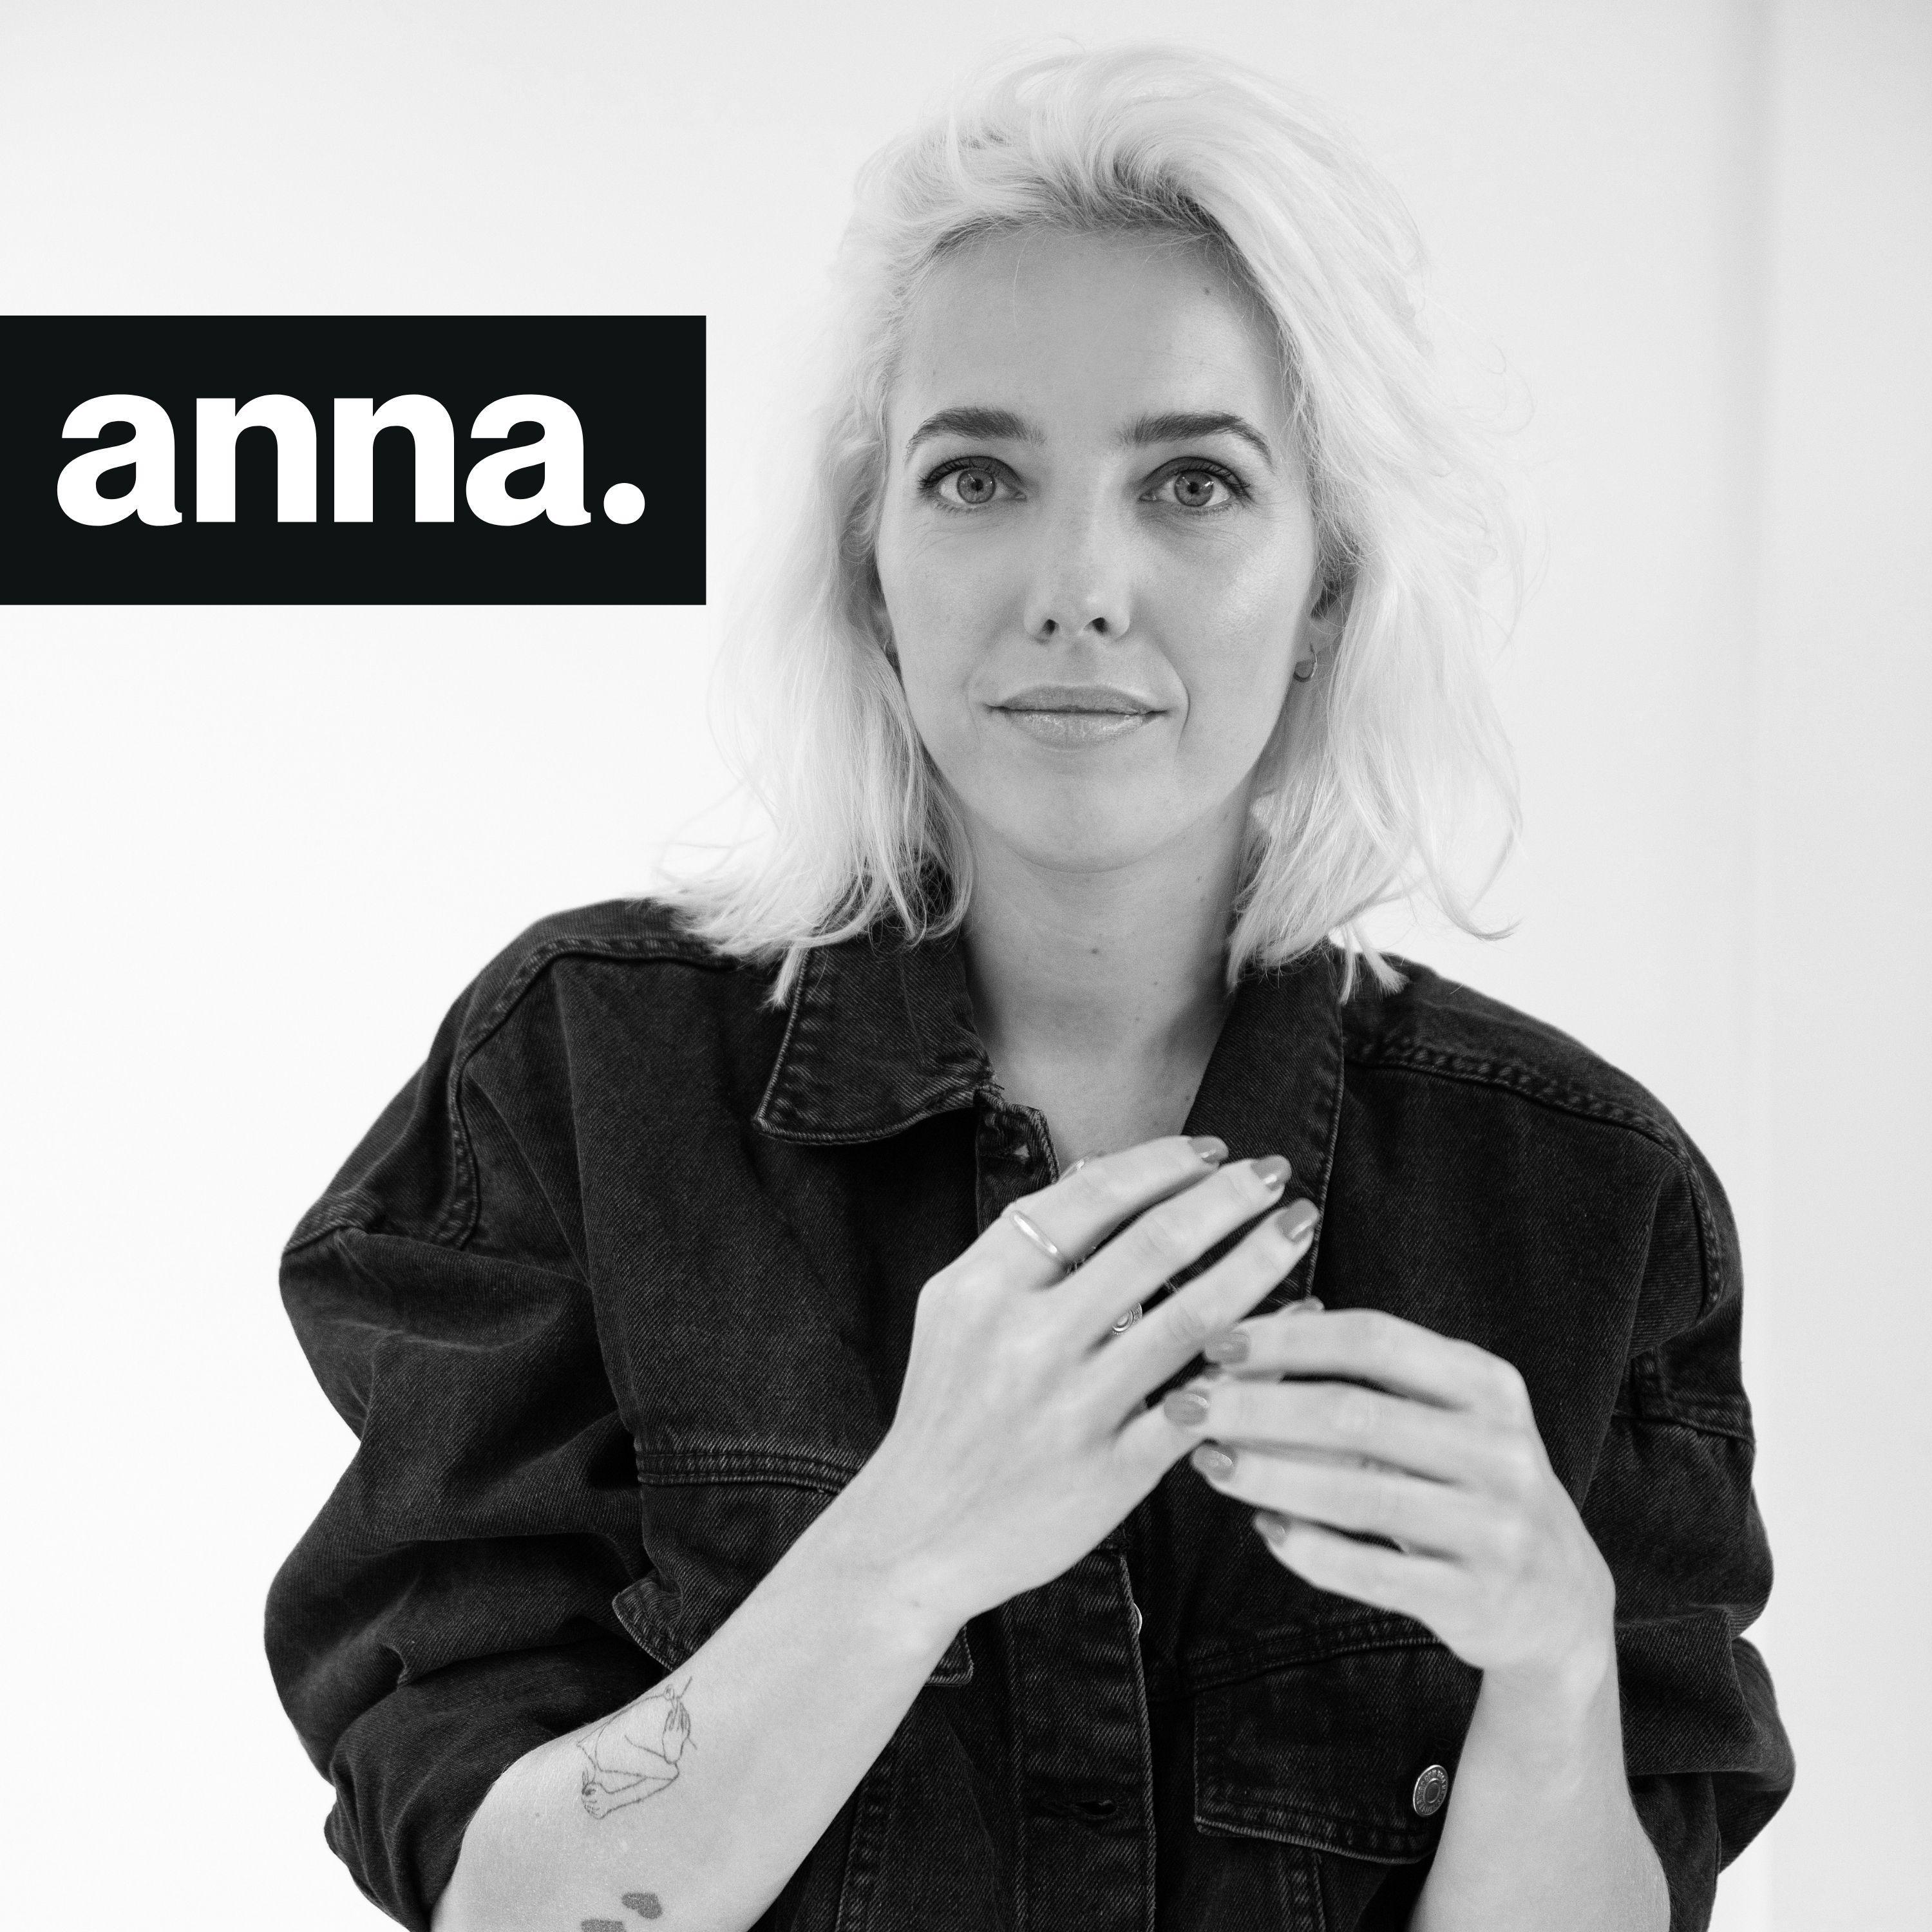 Anna Bootsma